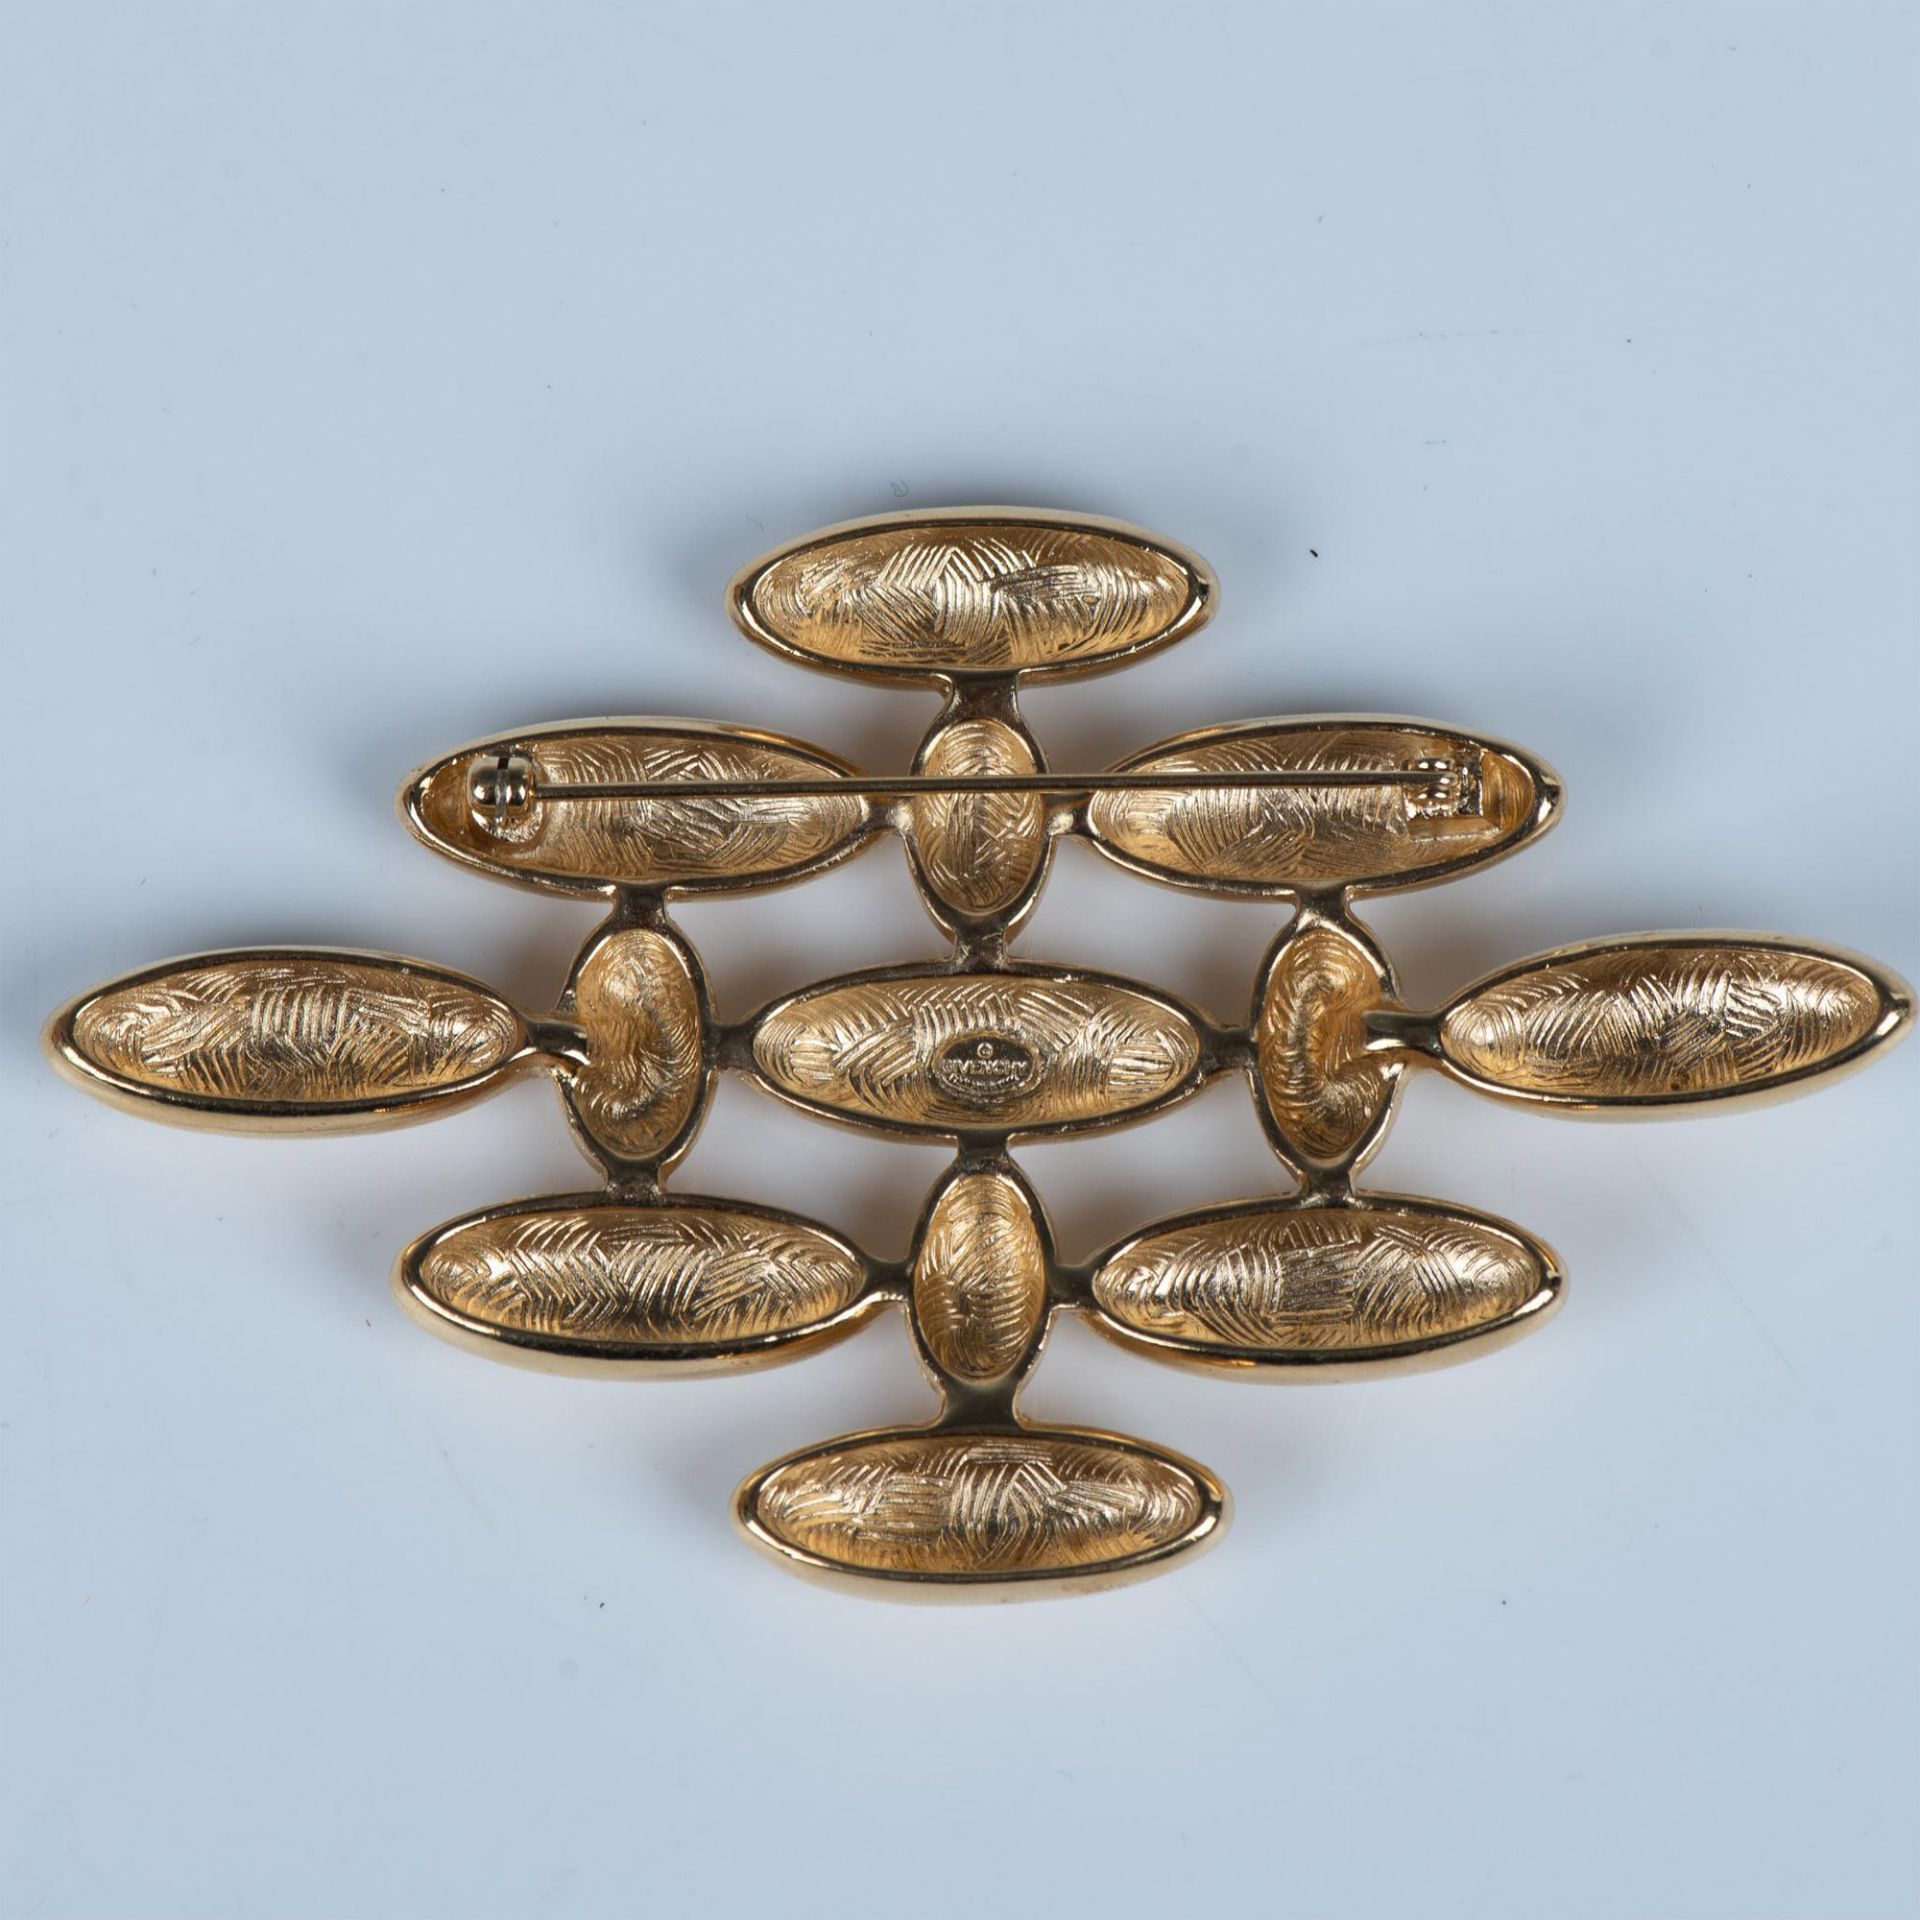 Givenchy Large Modernist Gold Metal Brooch - Image 2 of 4